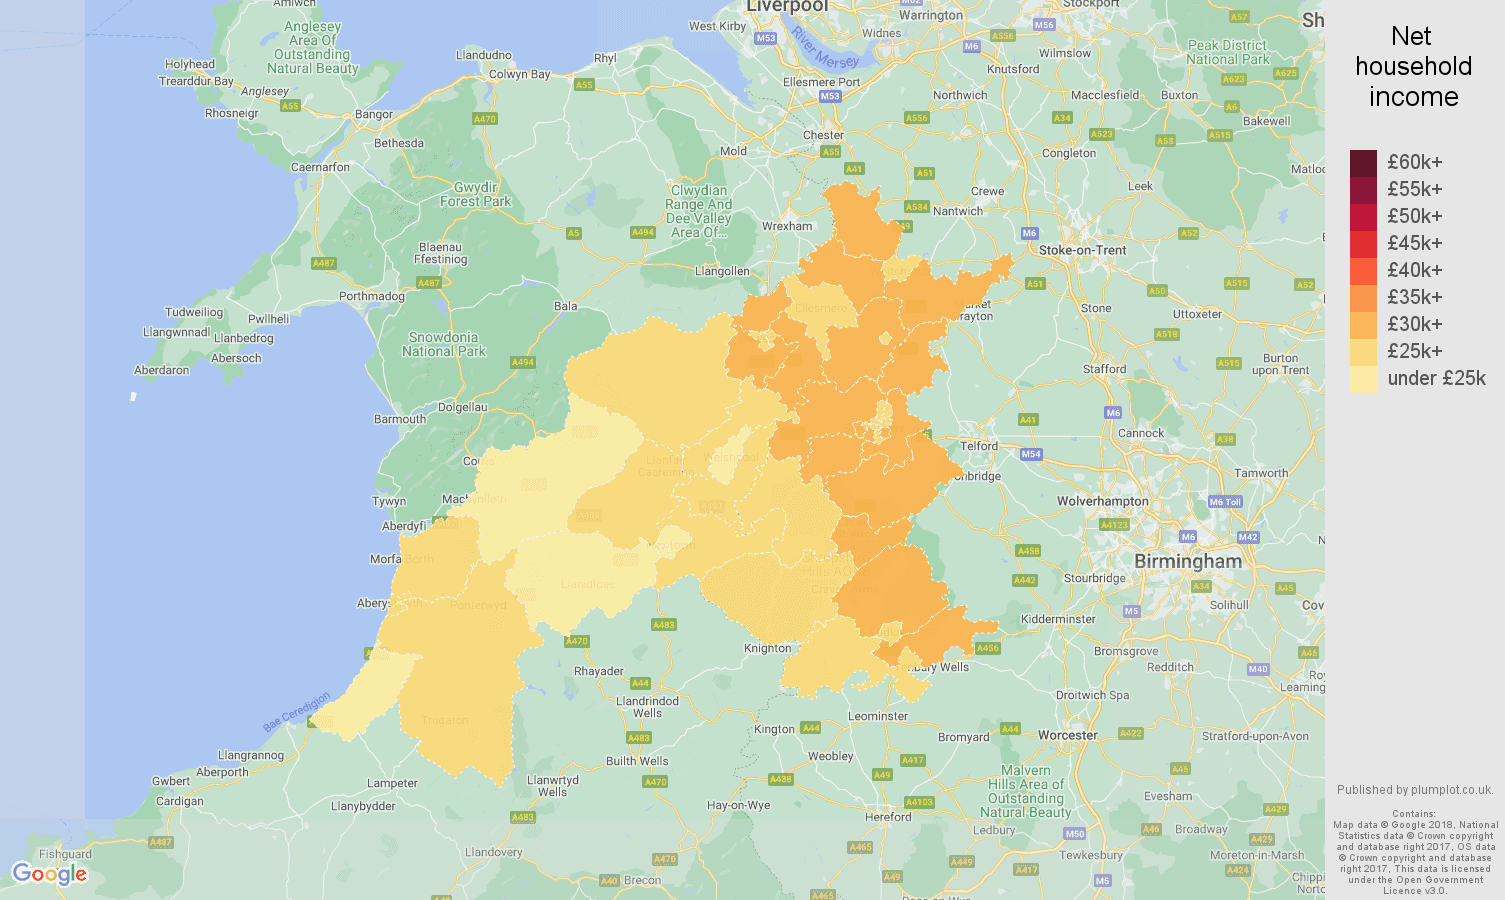 Shrewsbury net household income map